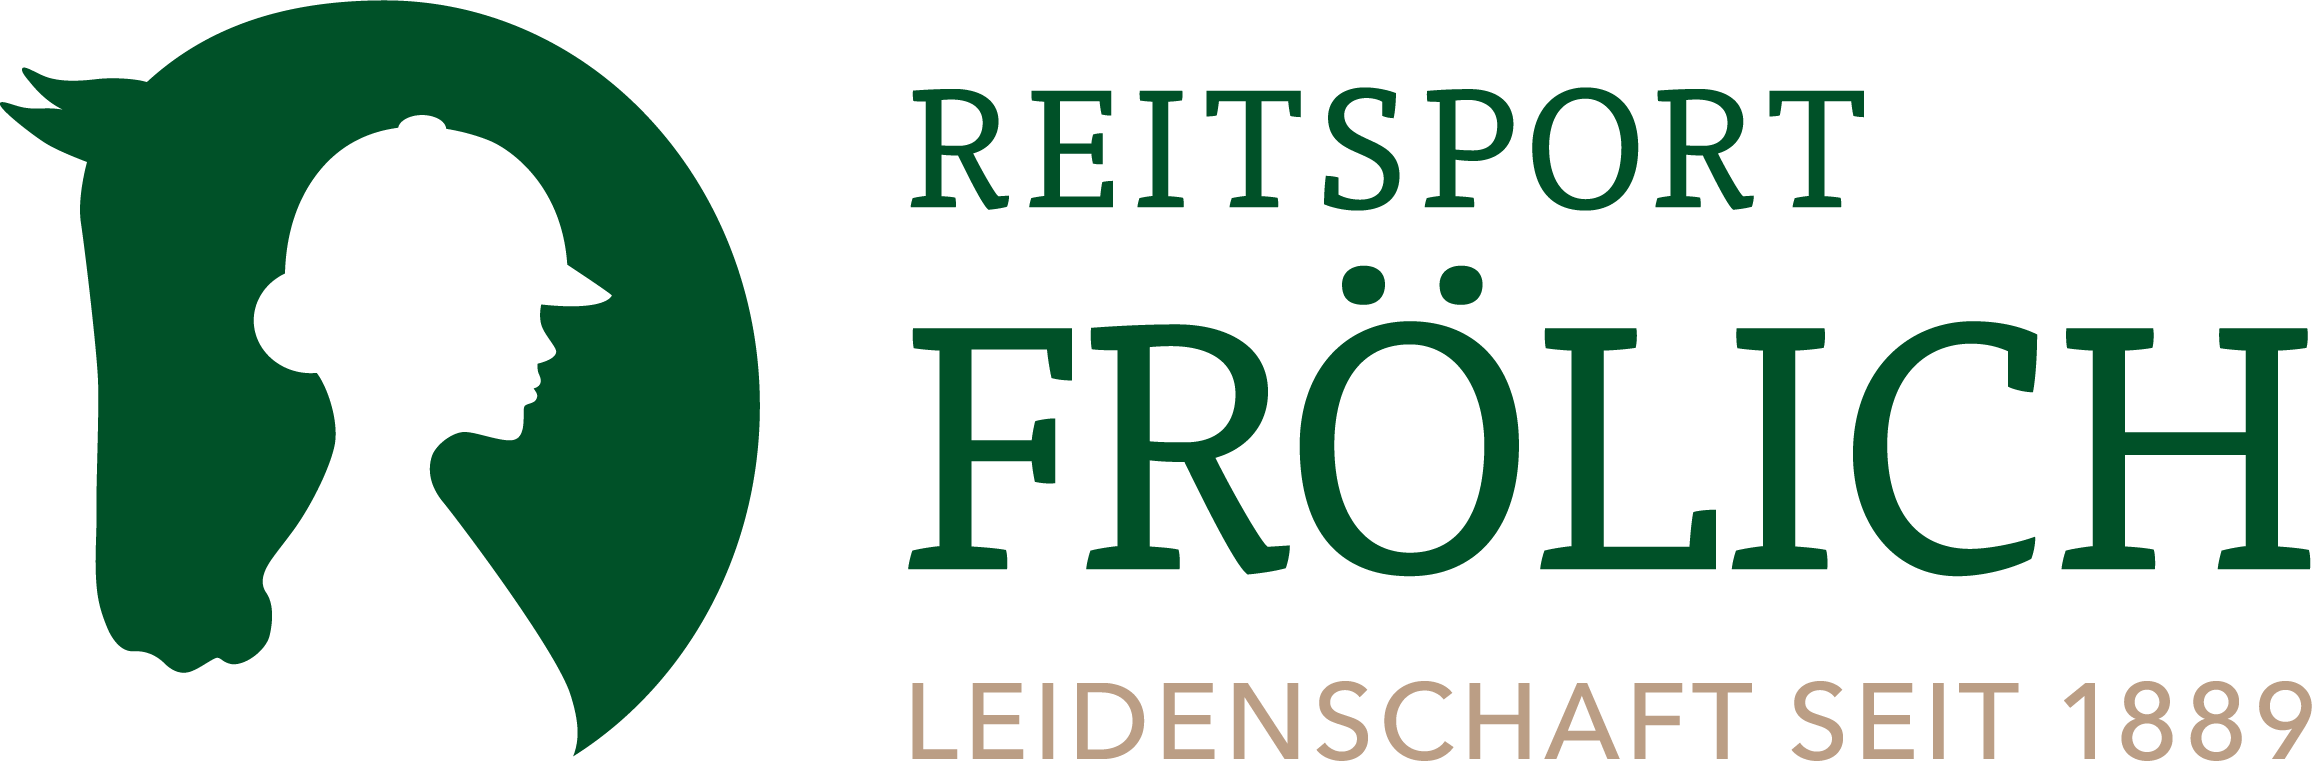 Reitsport_Froelich_Logo_RGB_300dpi (1).png